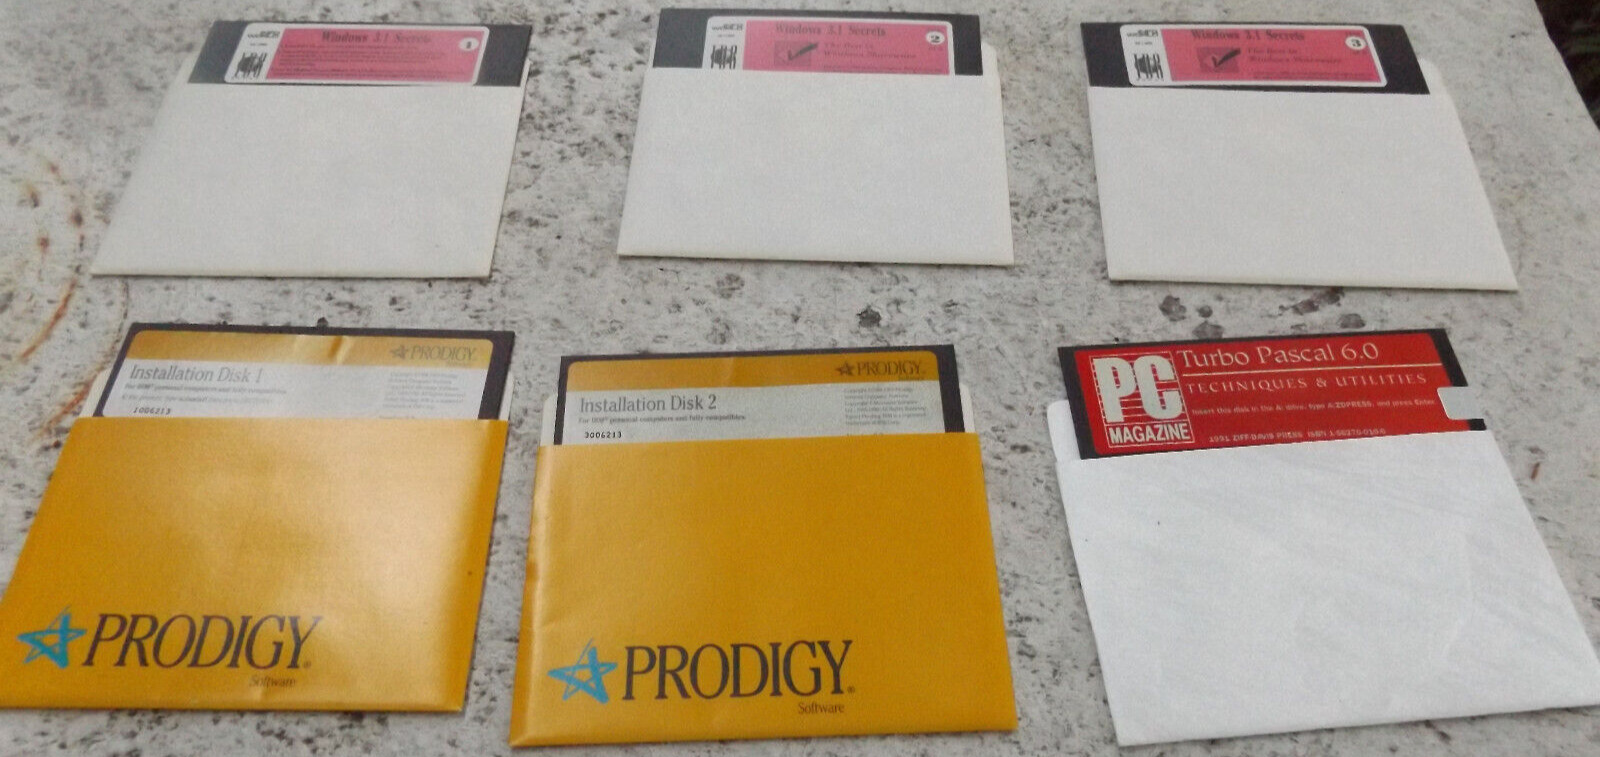 3 Vintage Programs on 5.25 Media: Windows 3.1 Secrets, Turbo Pascal 6.0; Prodigy